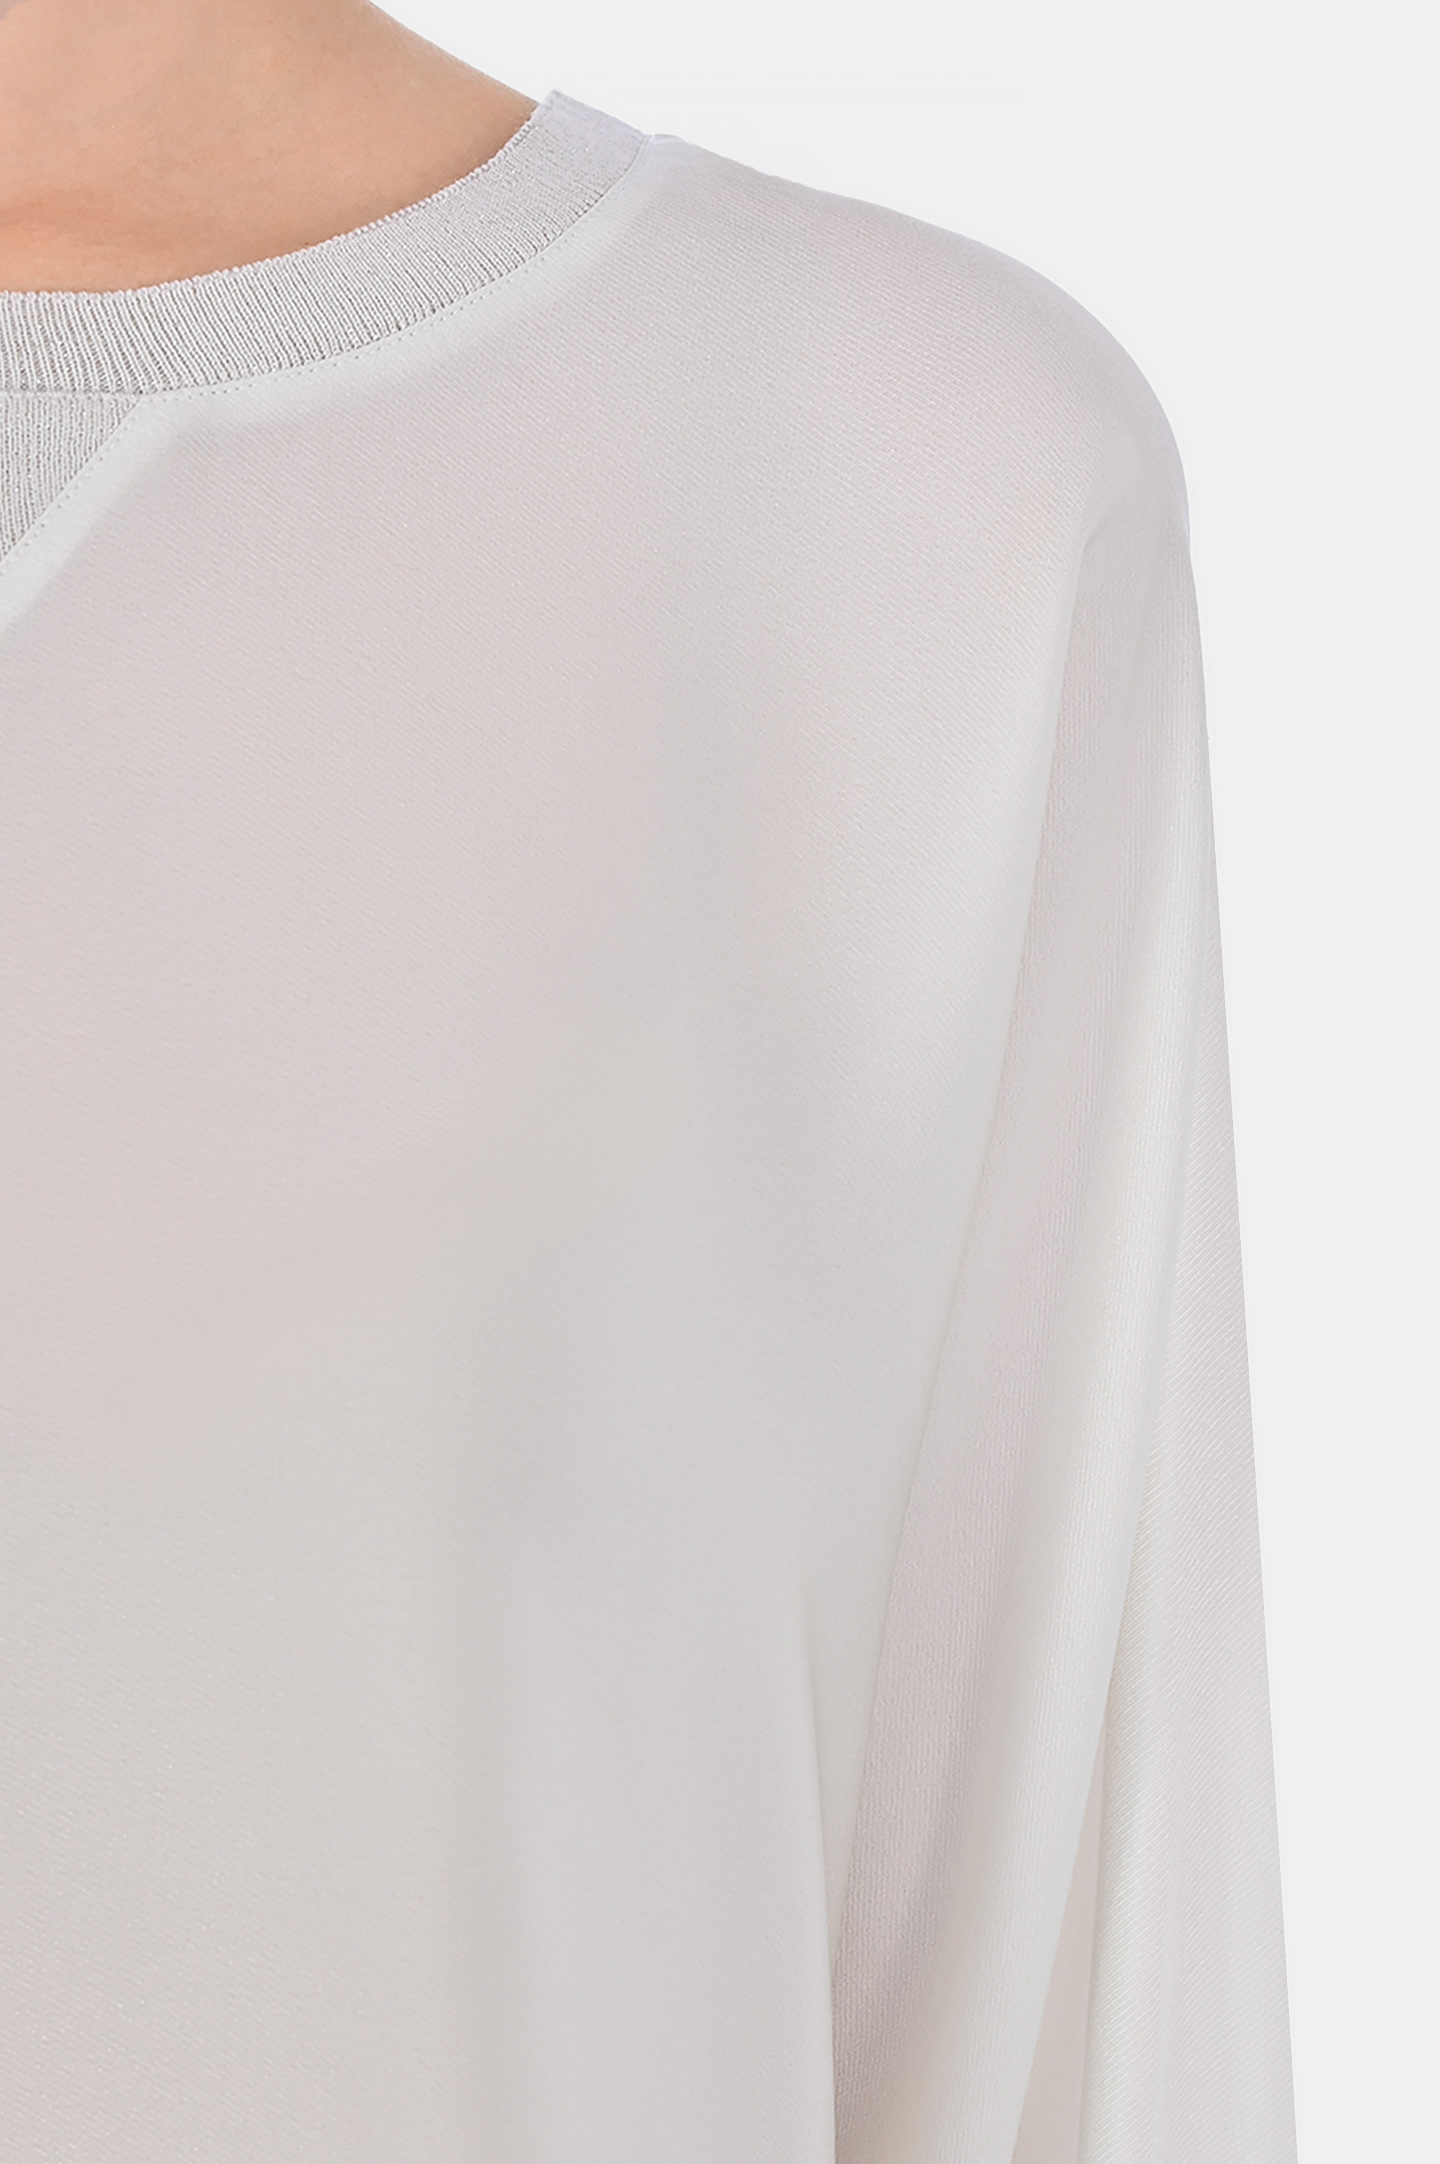 Блуза LORENA ANTONIAZZI P2461TS43A, цвет: Белый, Женский